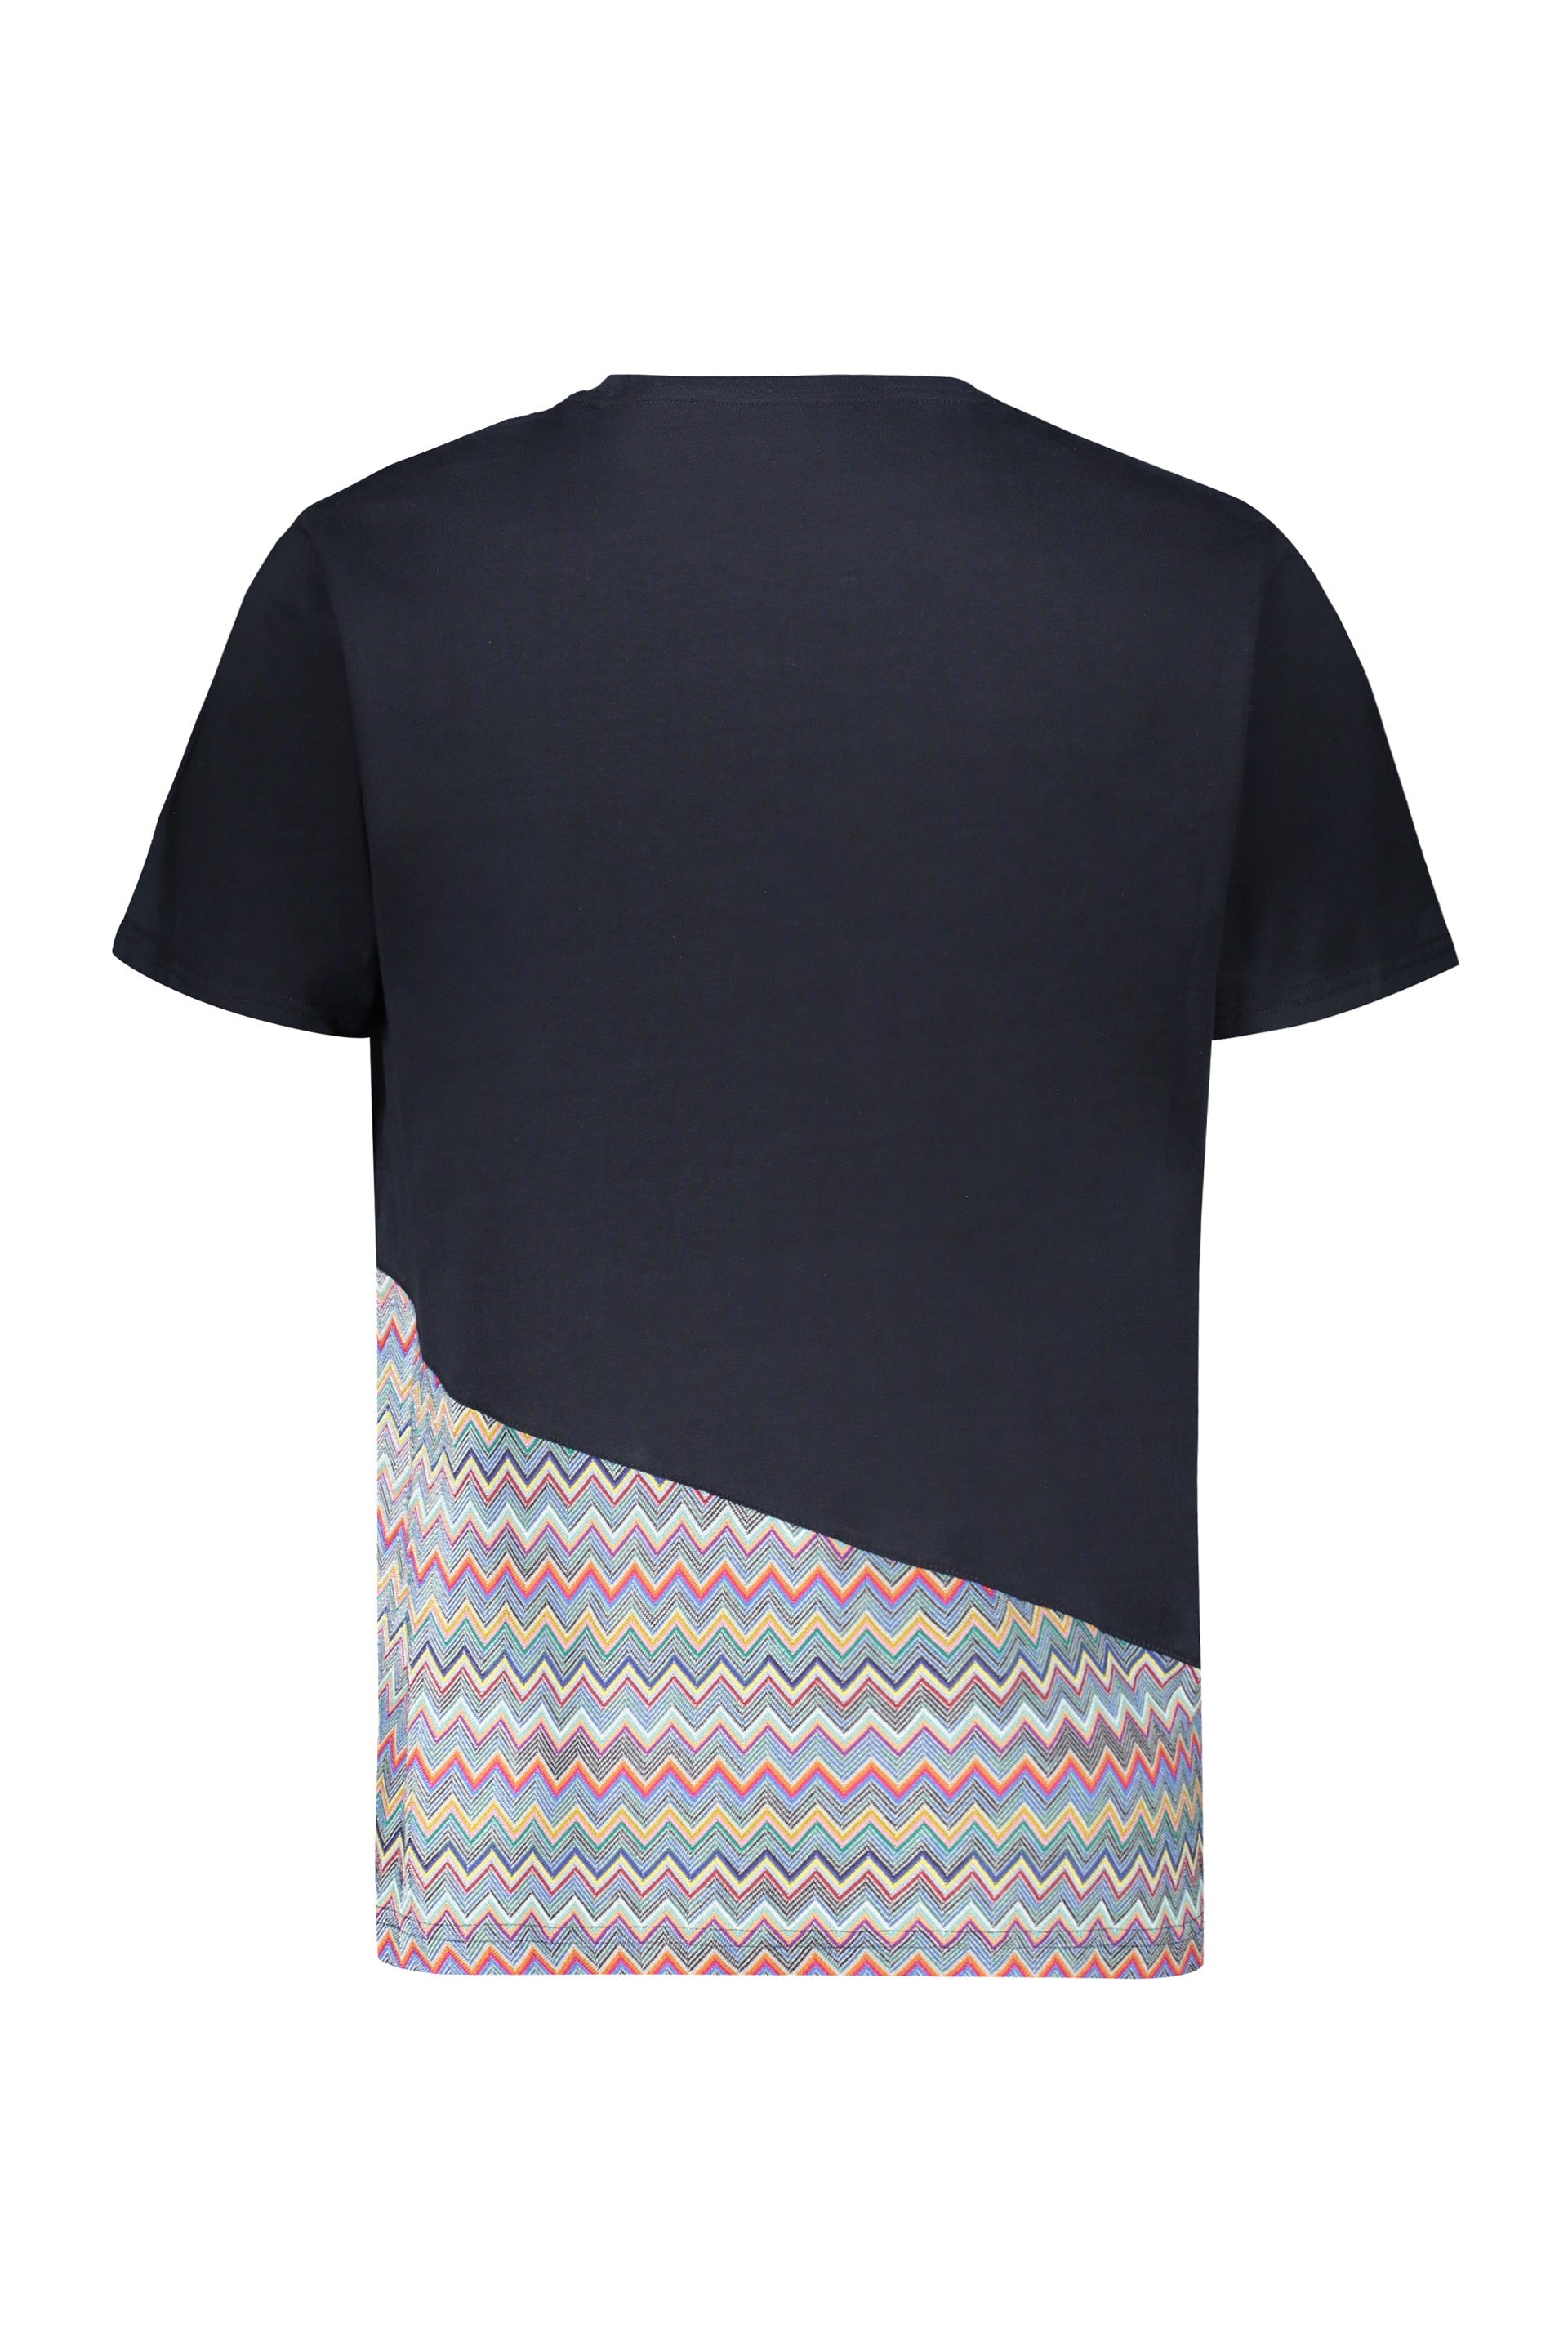 Missoni-OUTLET-SALE-Logo-cotton-t-shirt-Shirts-ARCHIVE-COLLECTION-2_e58b5c98-6eb6-434c-ae2a-0a0b96653065.jpg